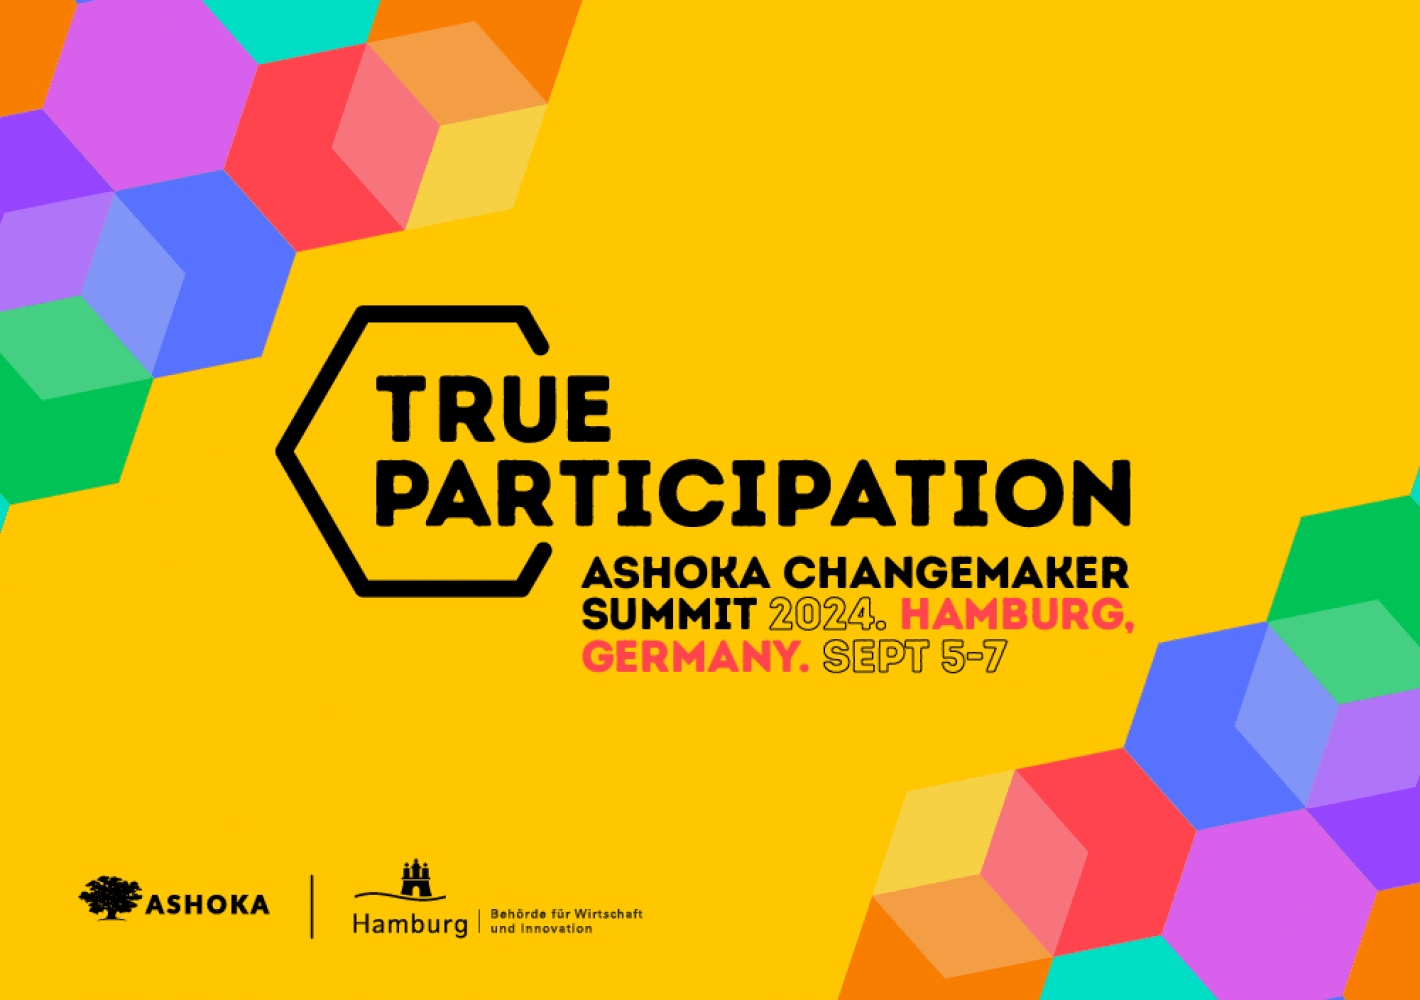 Ashoka Changemaker Summit